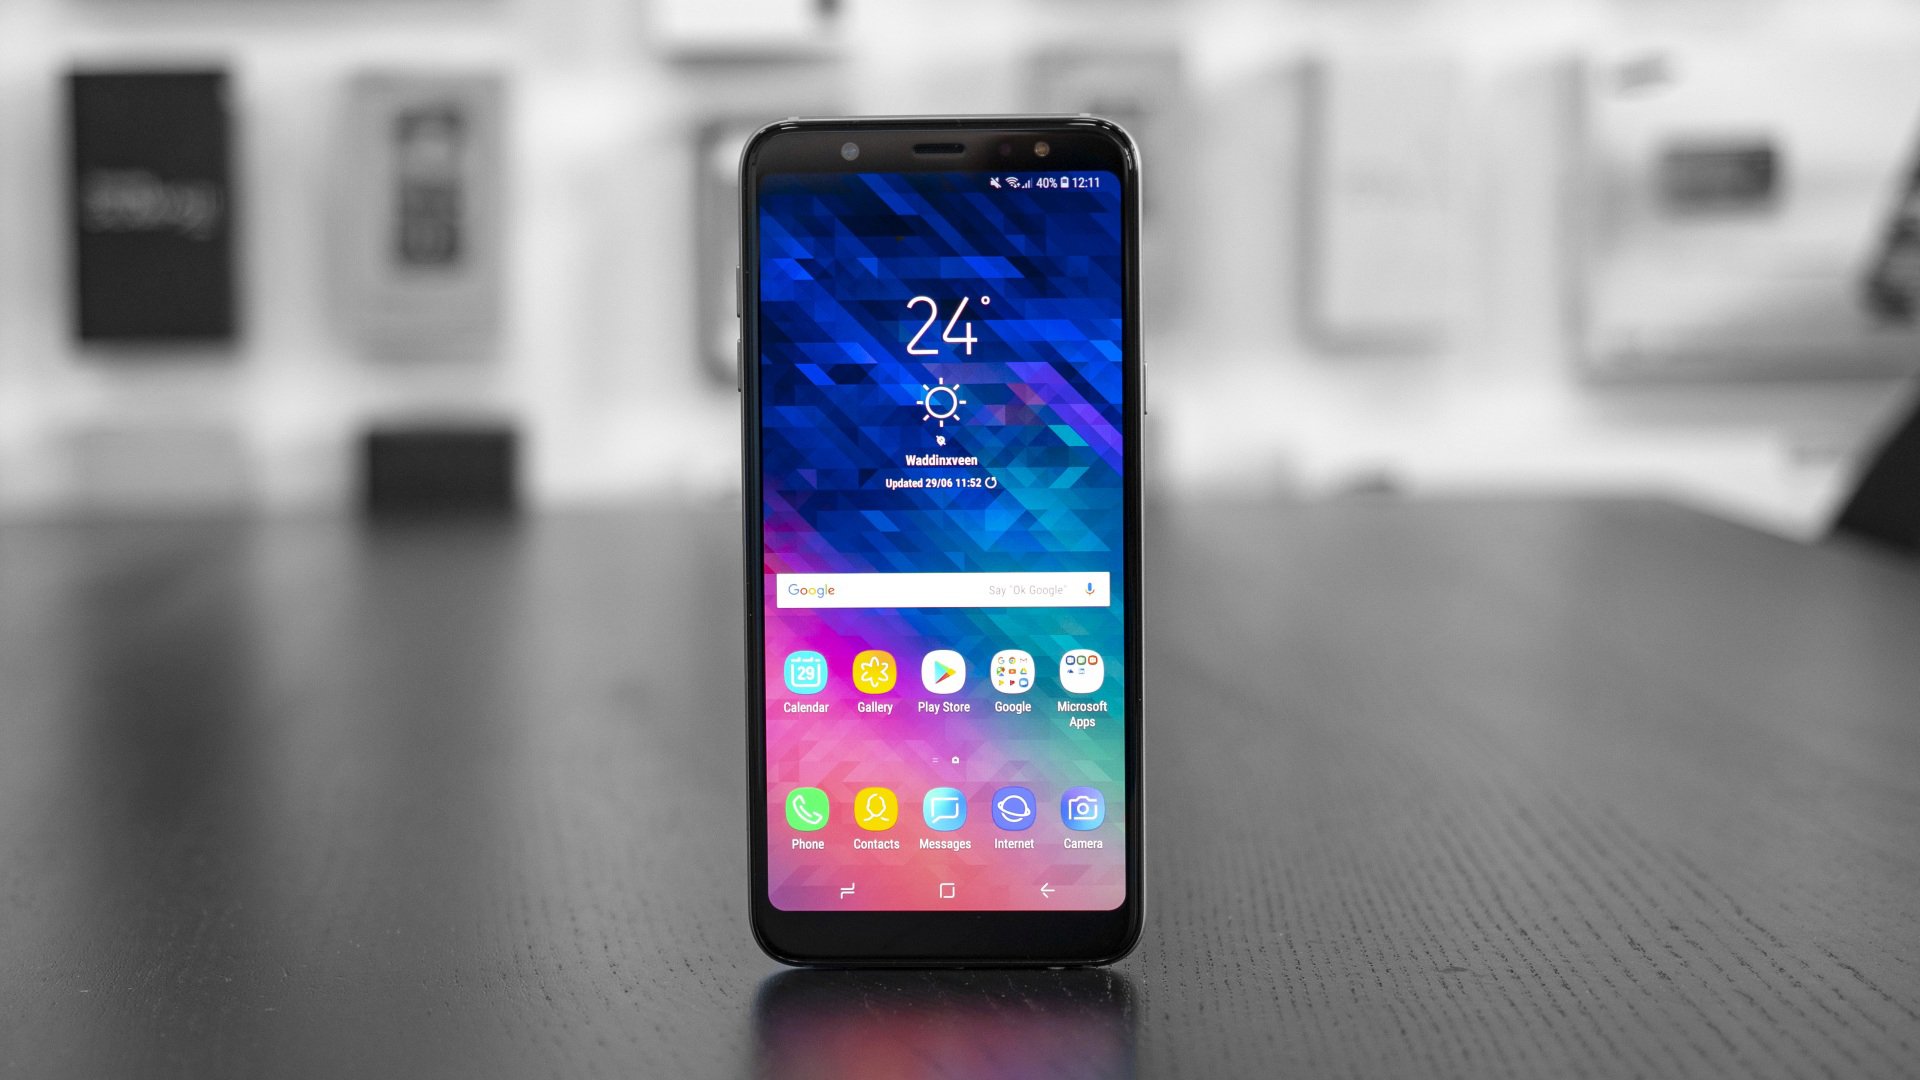 Samsung Galaxy A6 Plus 2018 Wallpapers - HD Backgrounds | WallpaperChill.com